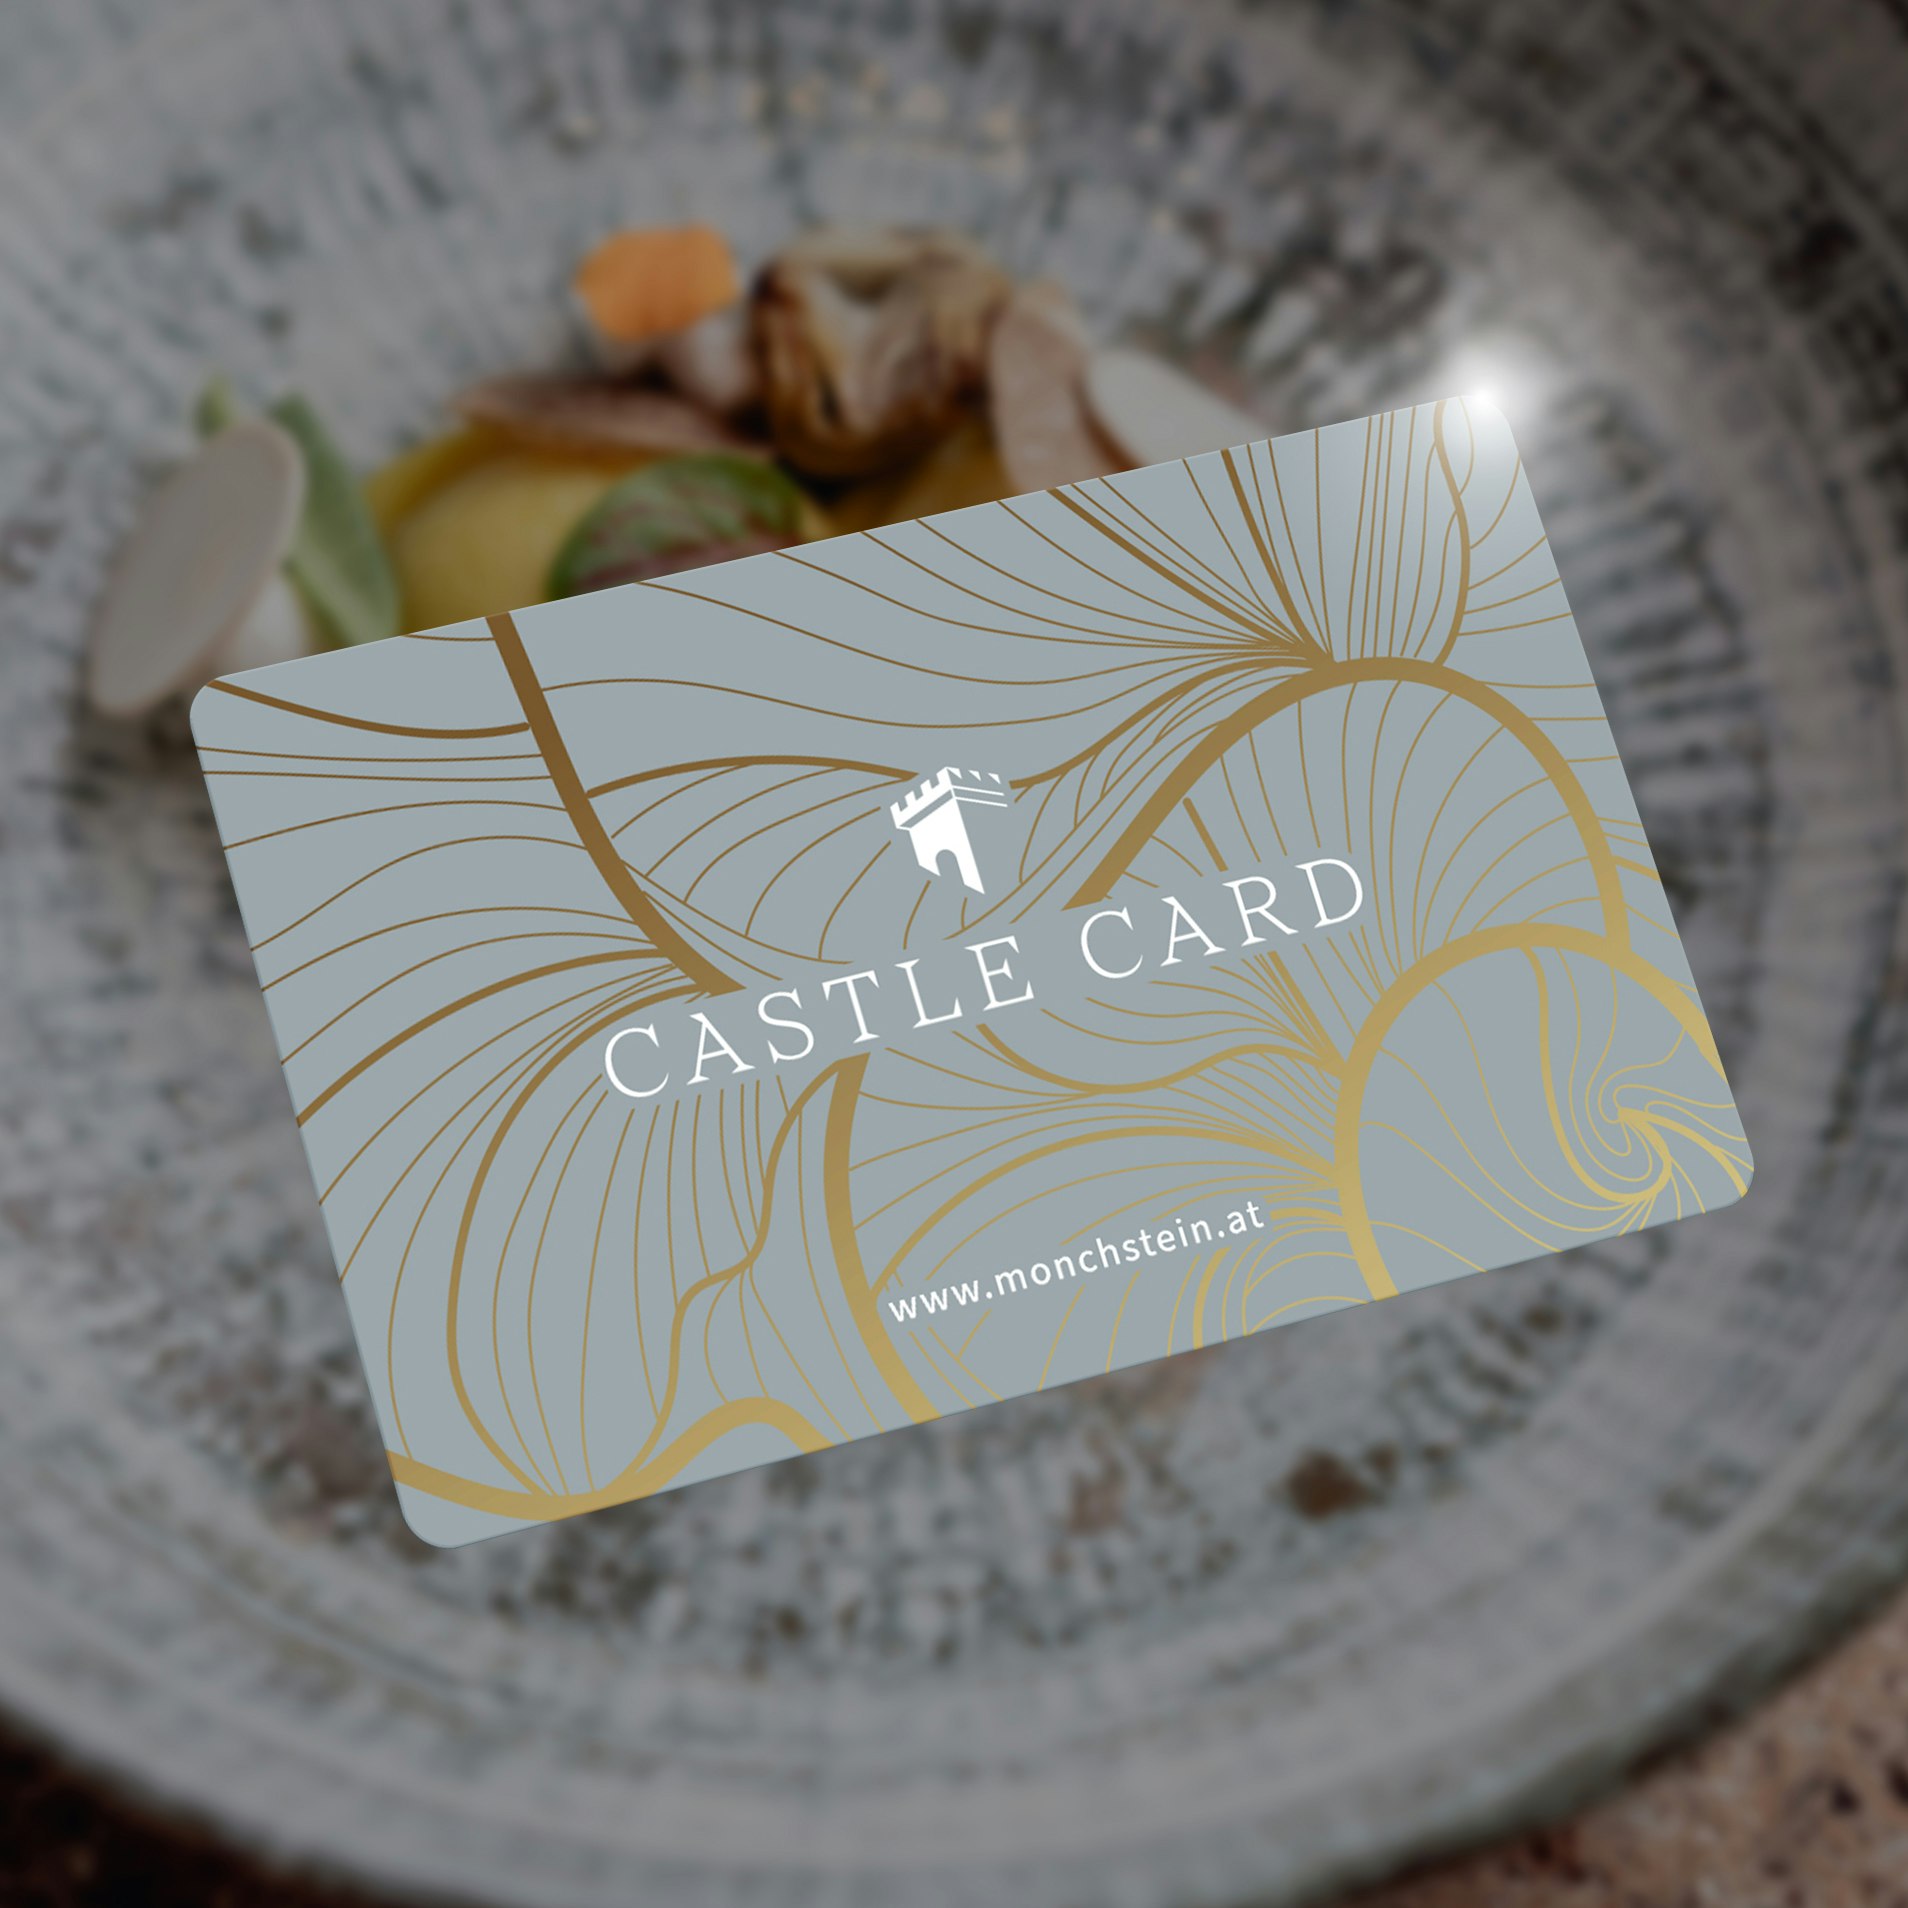 Castle Card Silver